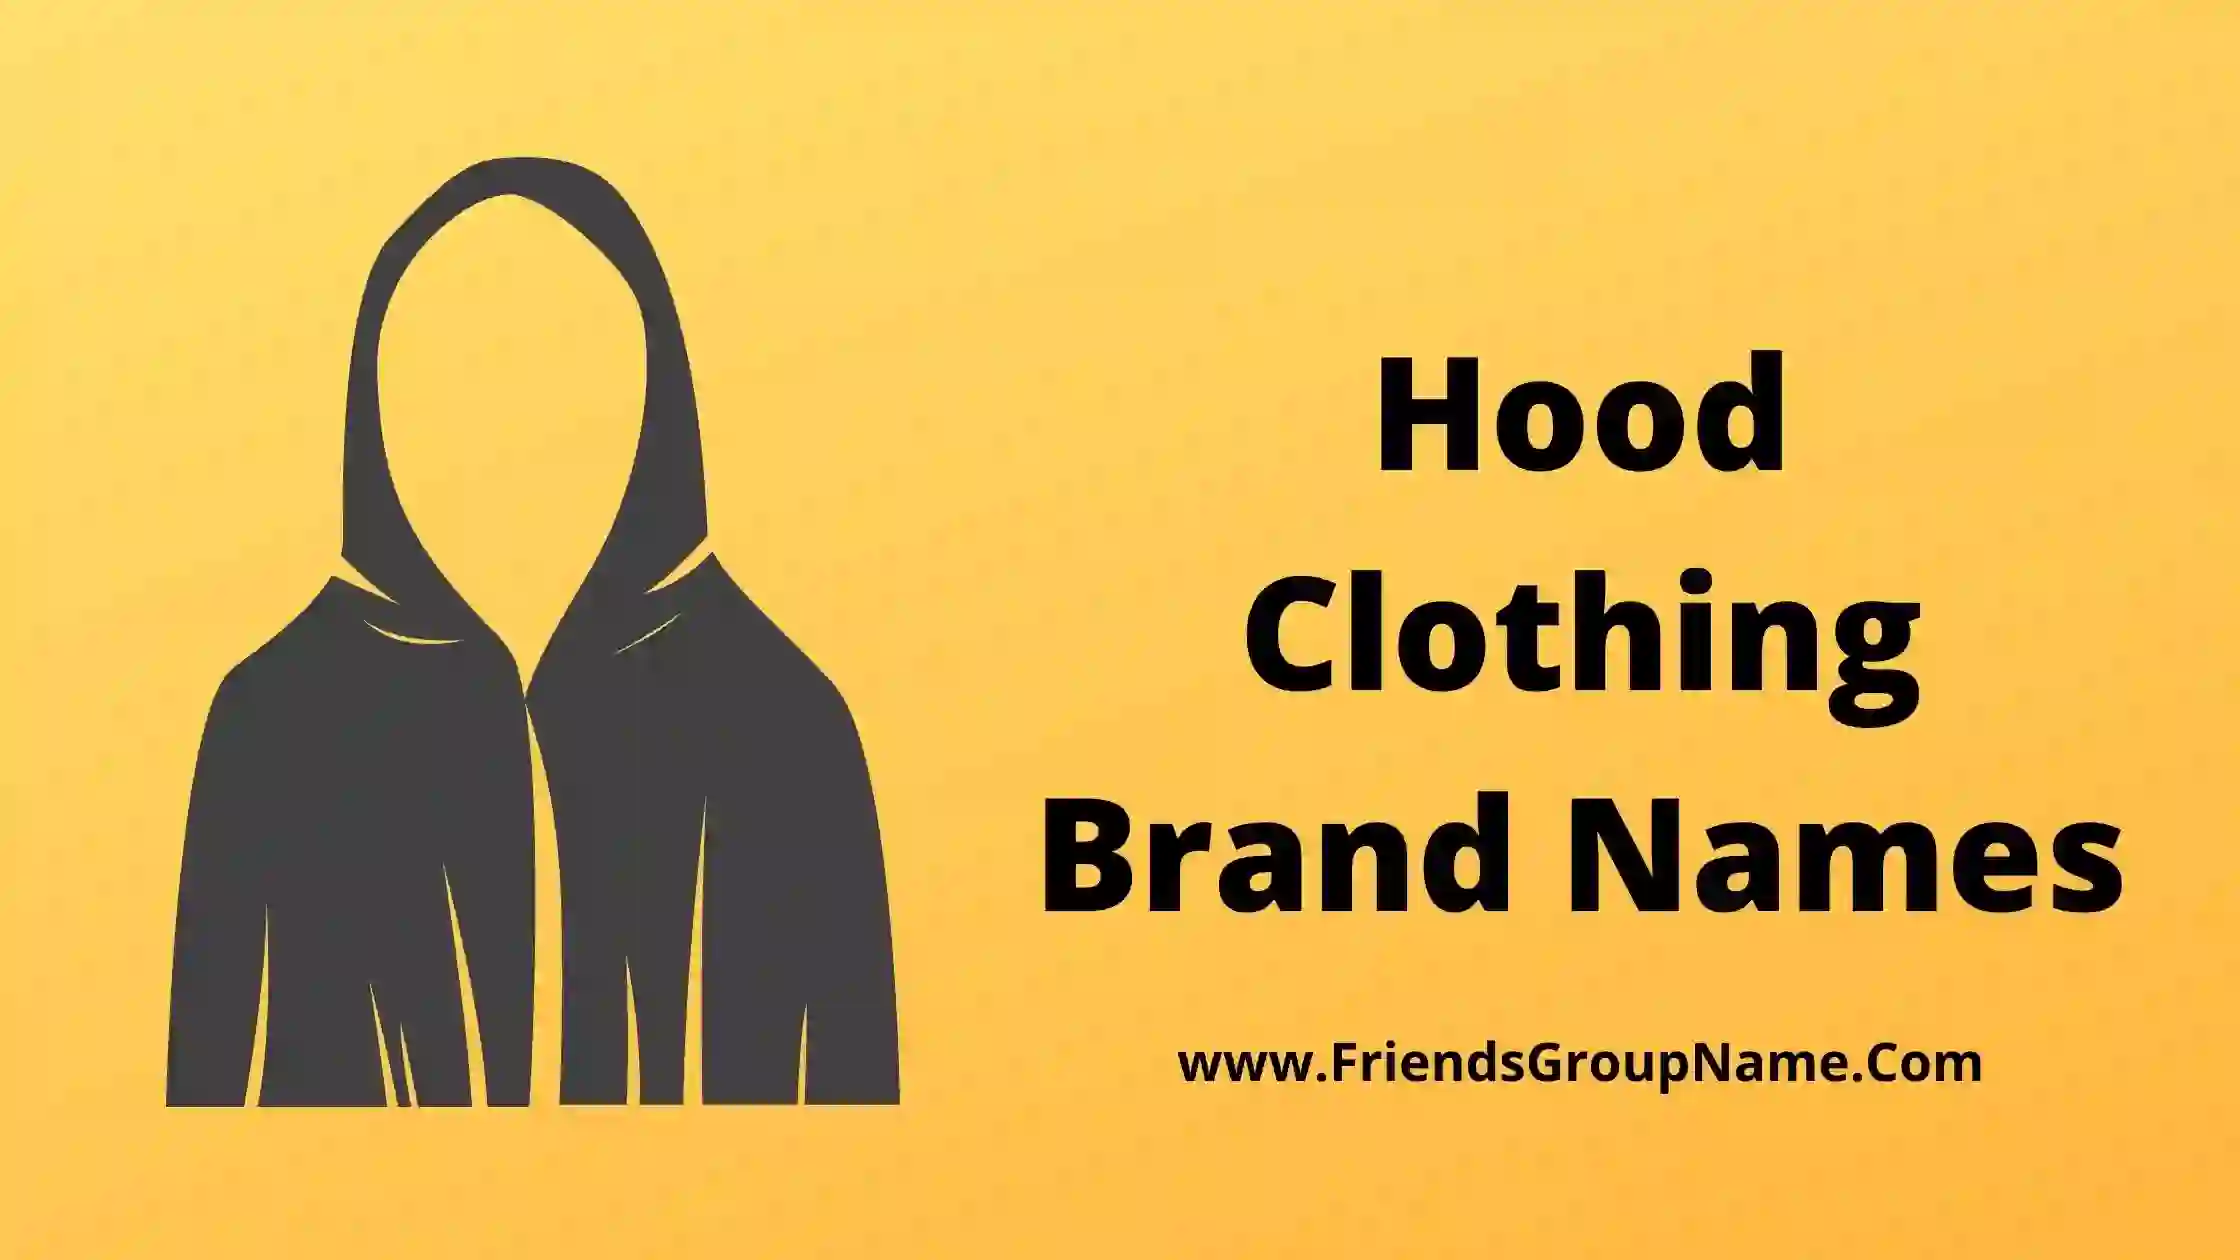 Hood Clothing Brand Names